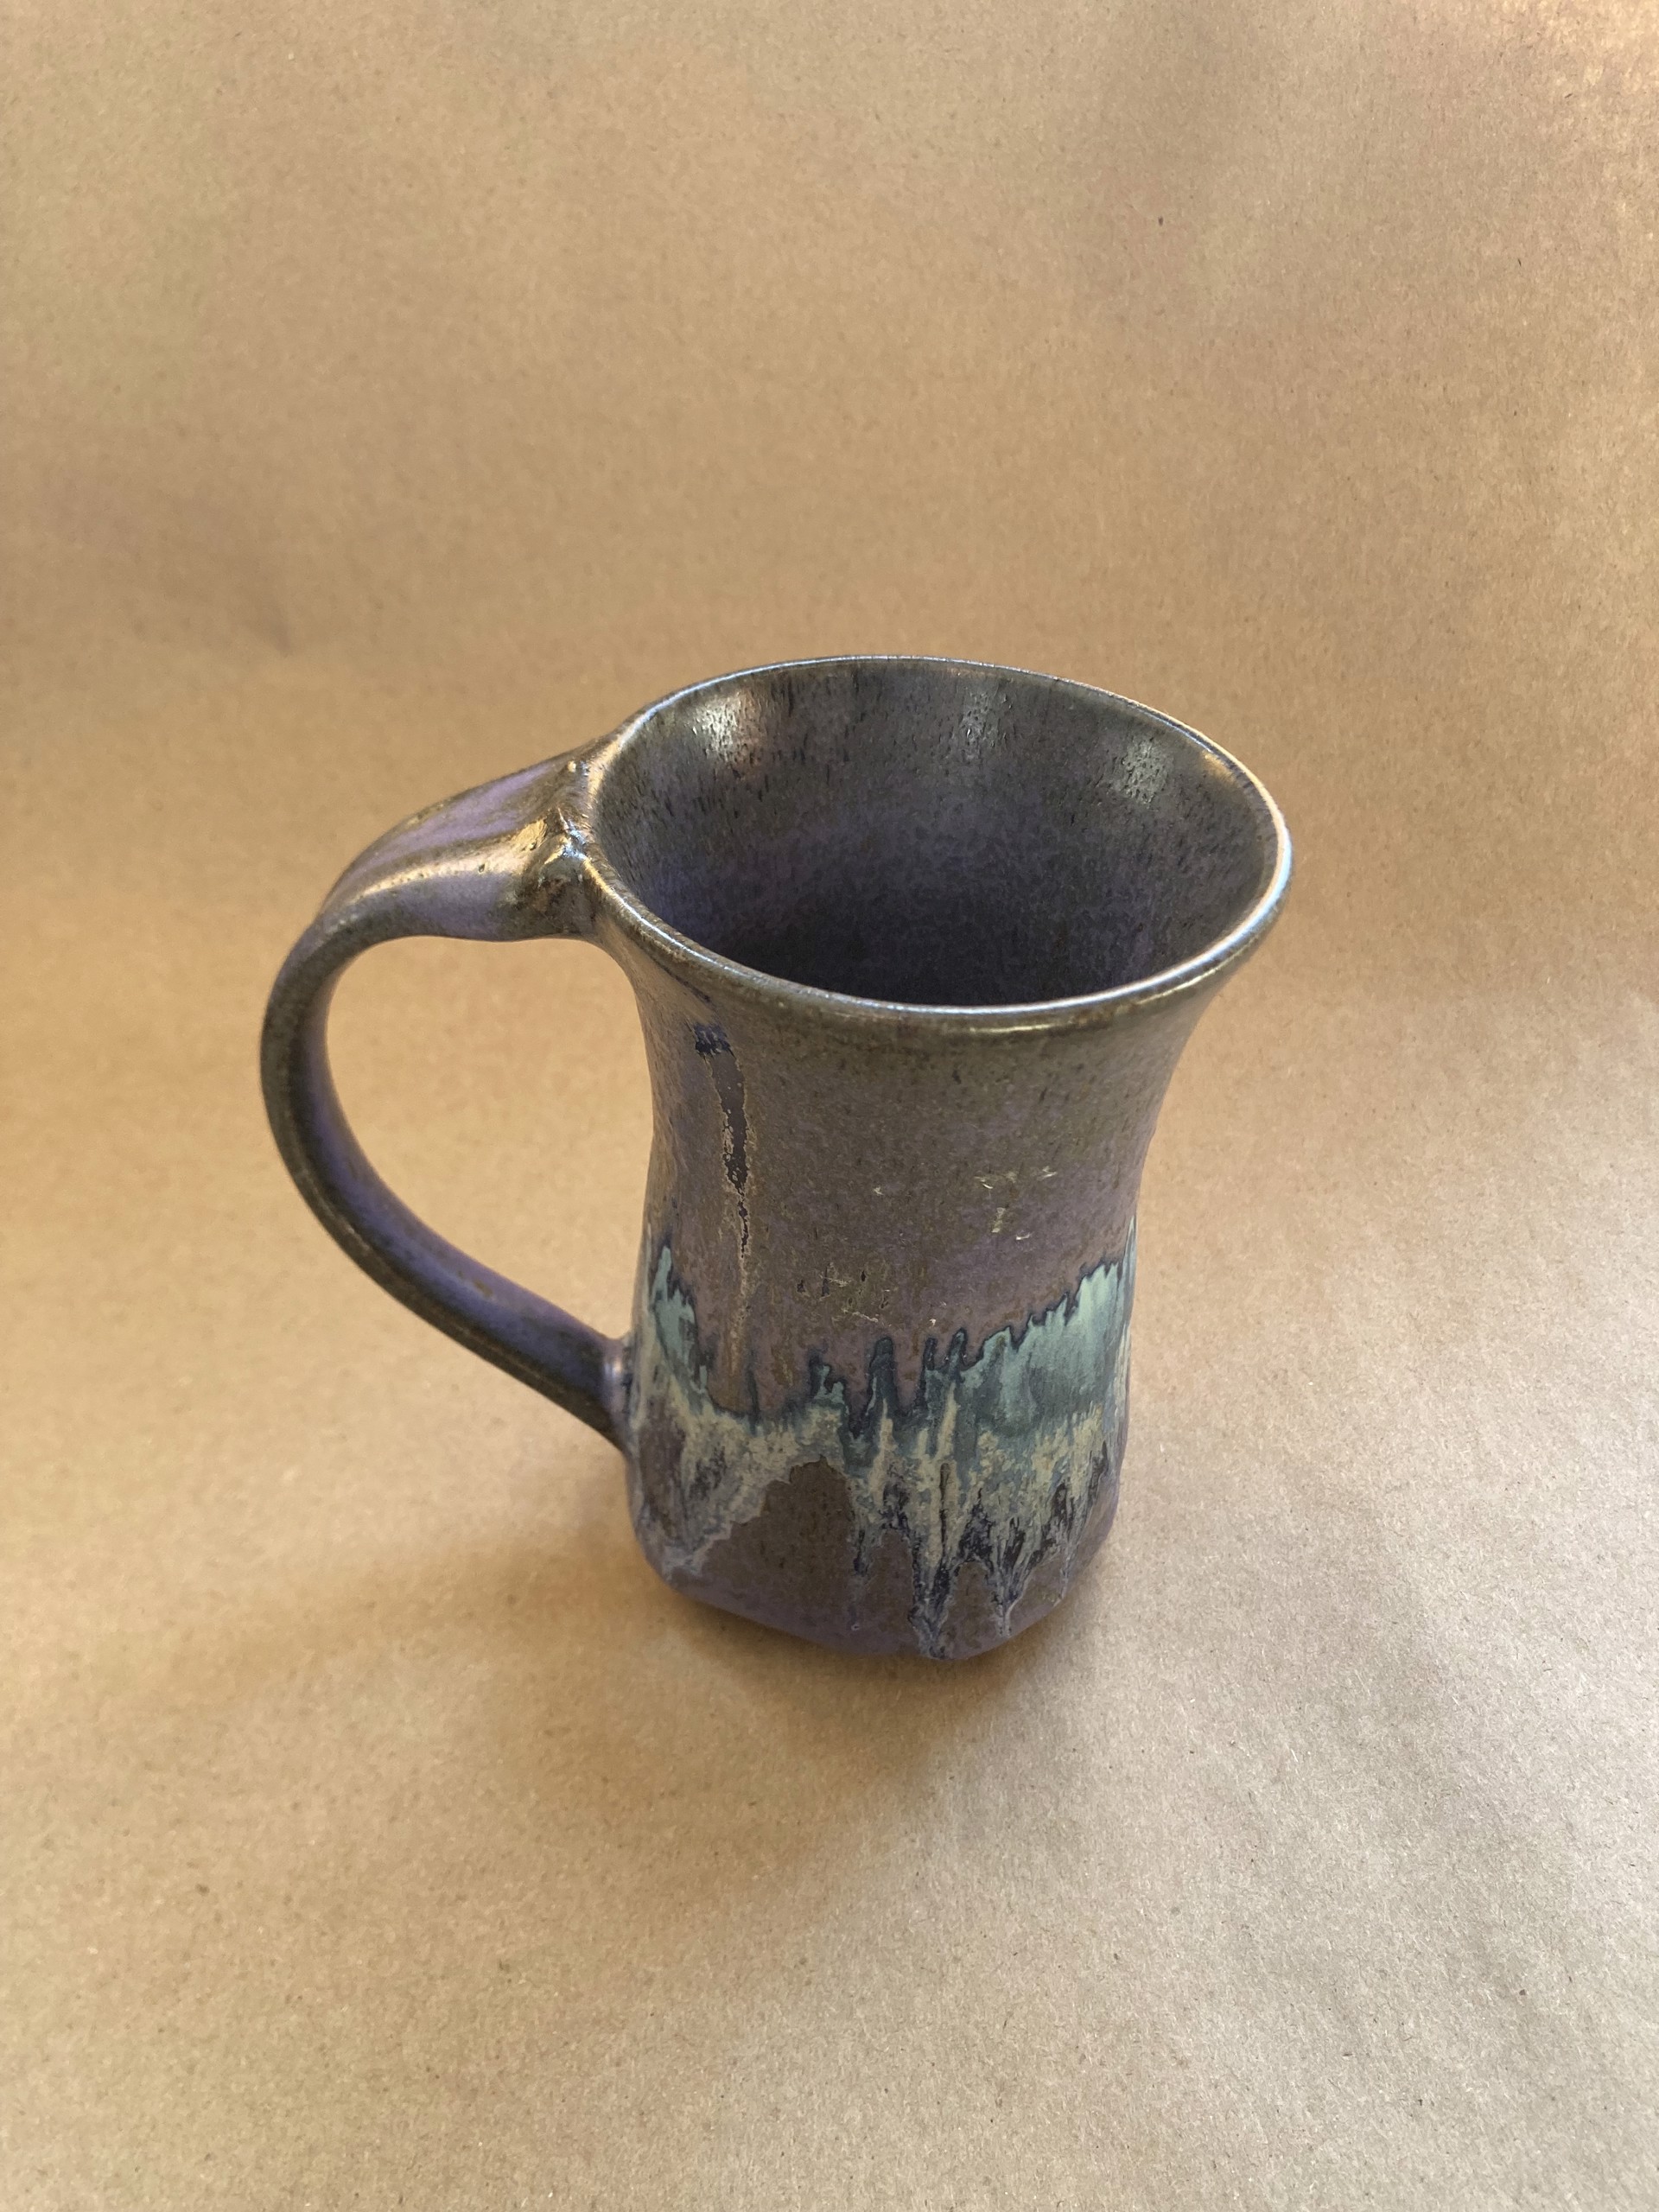 Tall Mug #4 by Sharon Scrattish